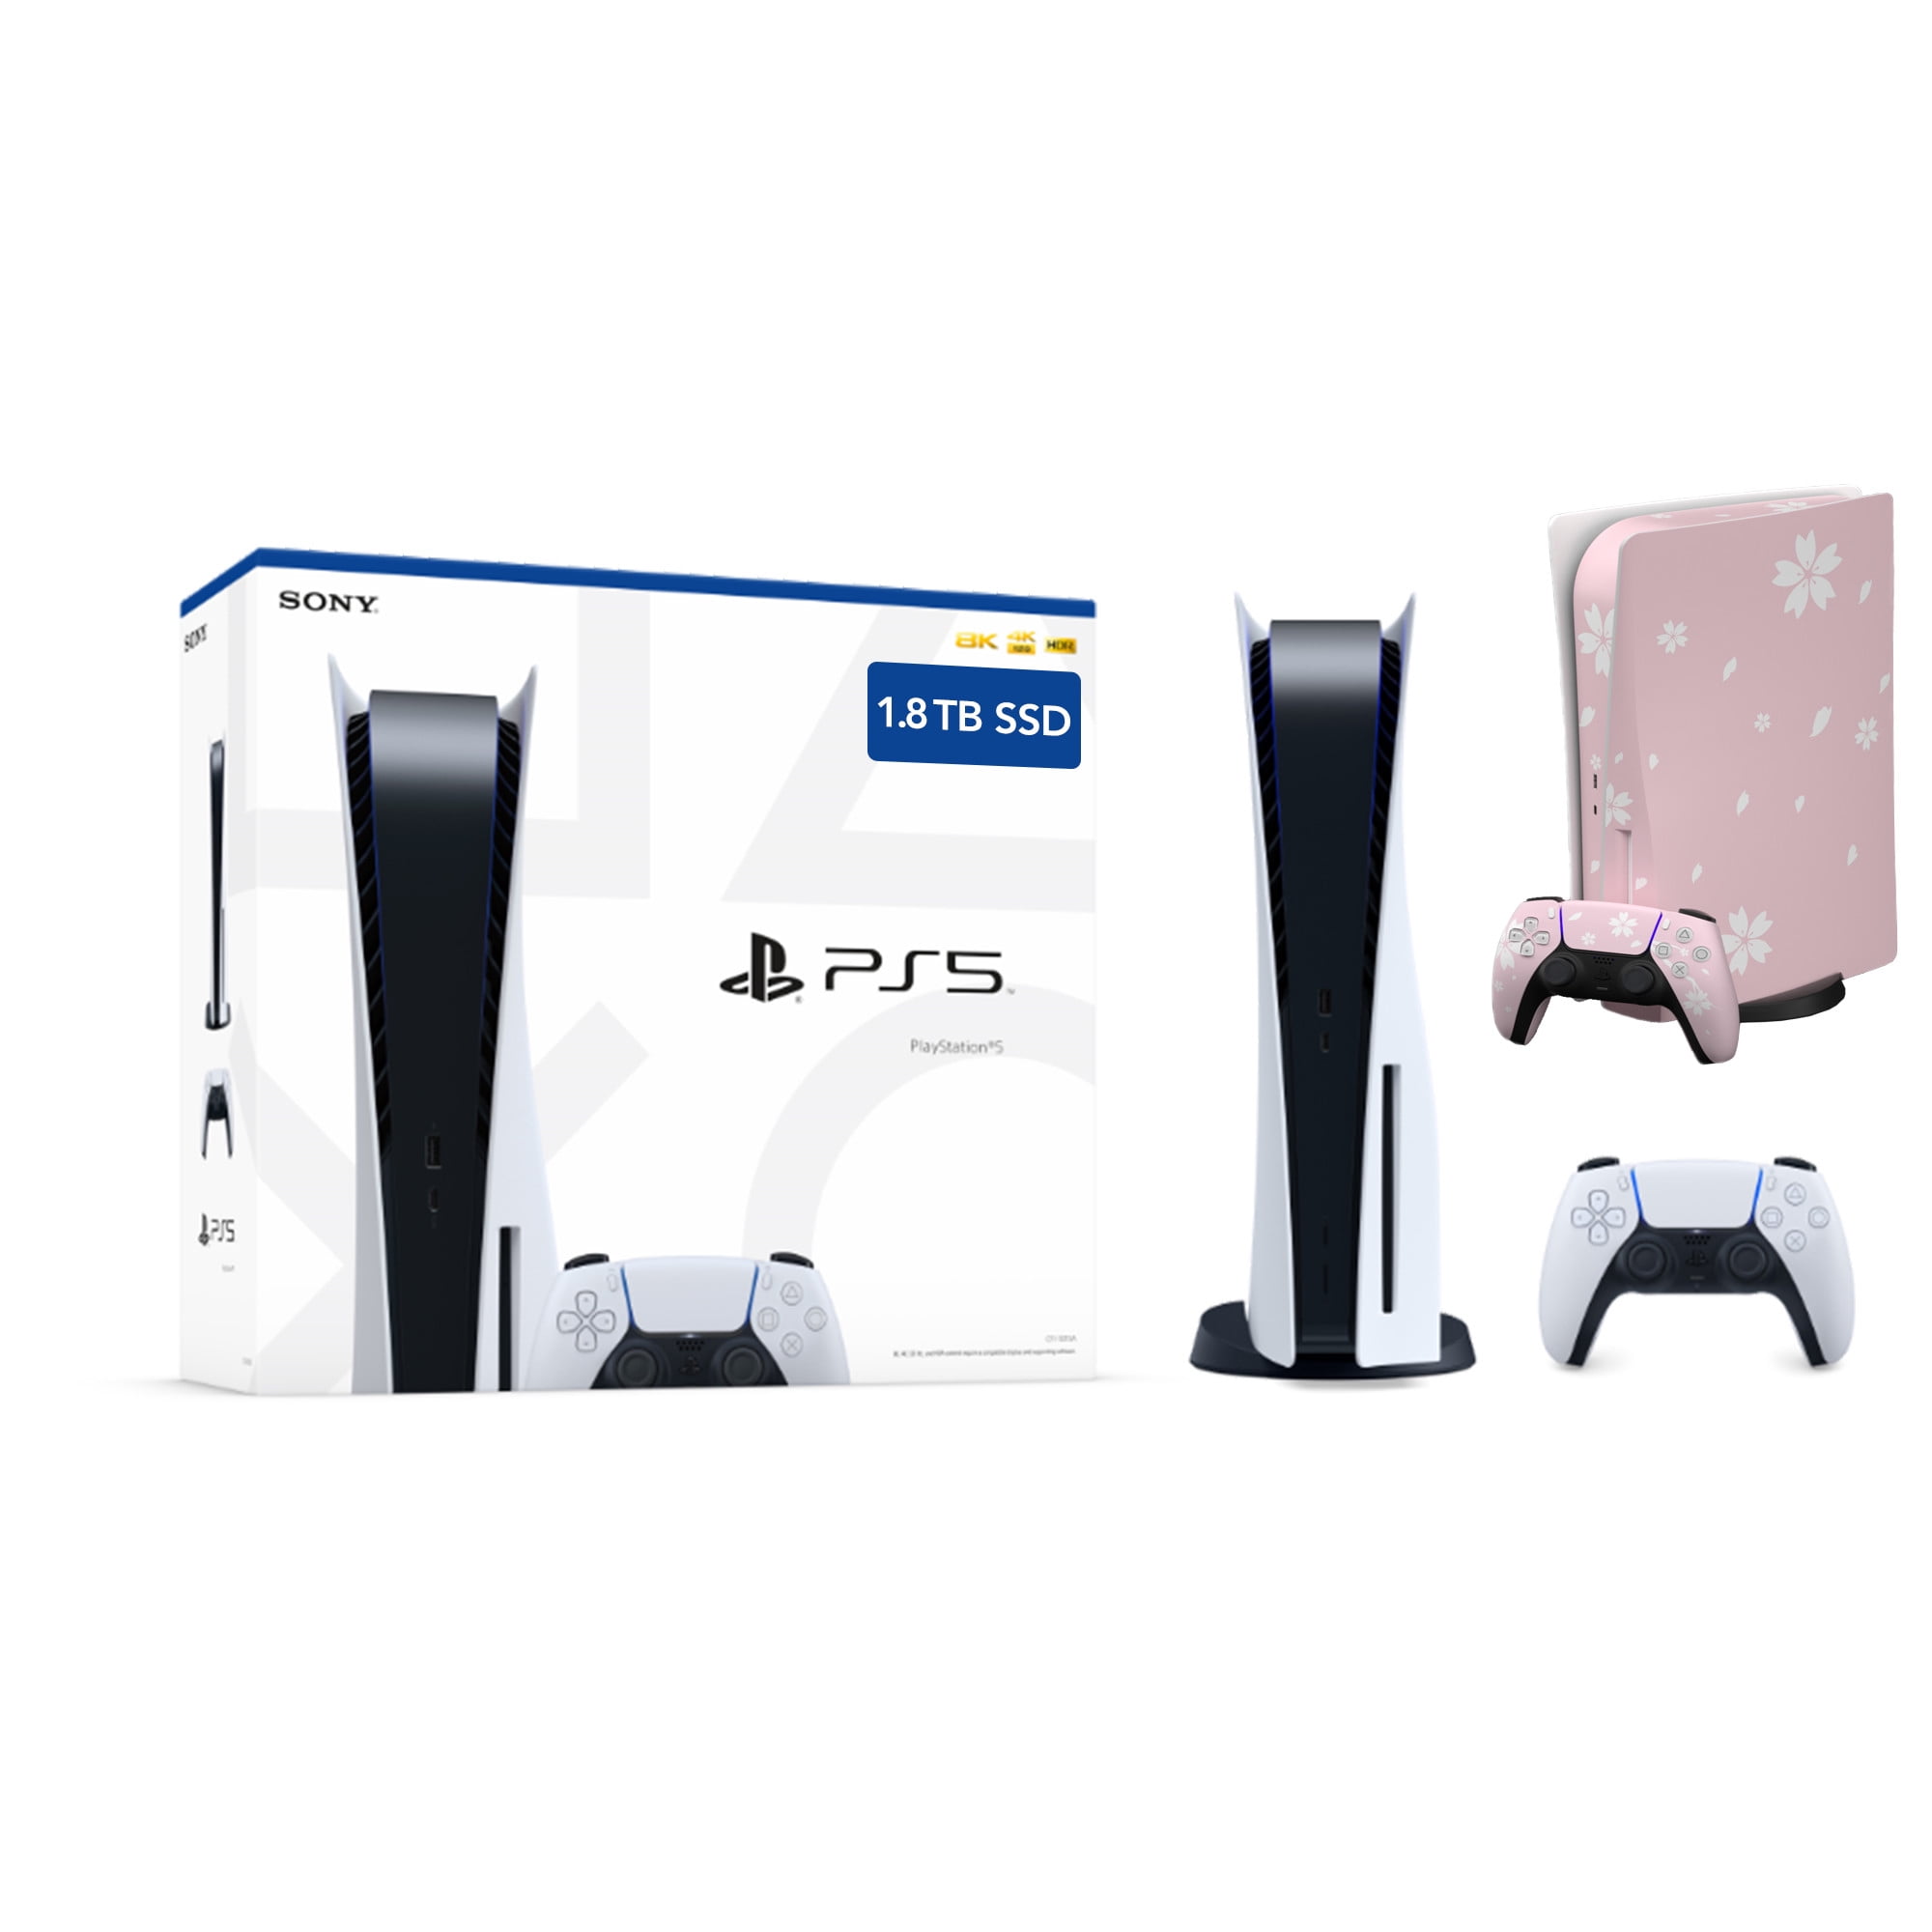 PlayStation 5 Disc 1.8TB Upgraded SSD PS5 Gaming Console, Mytrix Full Body  Skin Sticker, Sakura - PS5 Disc Version JP Region Free 